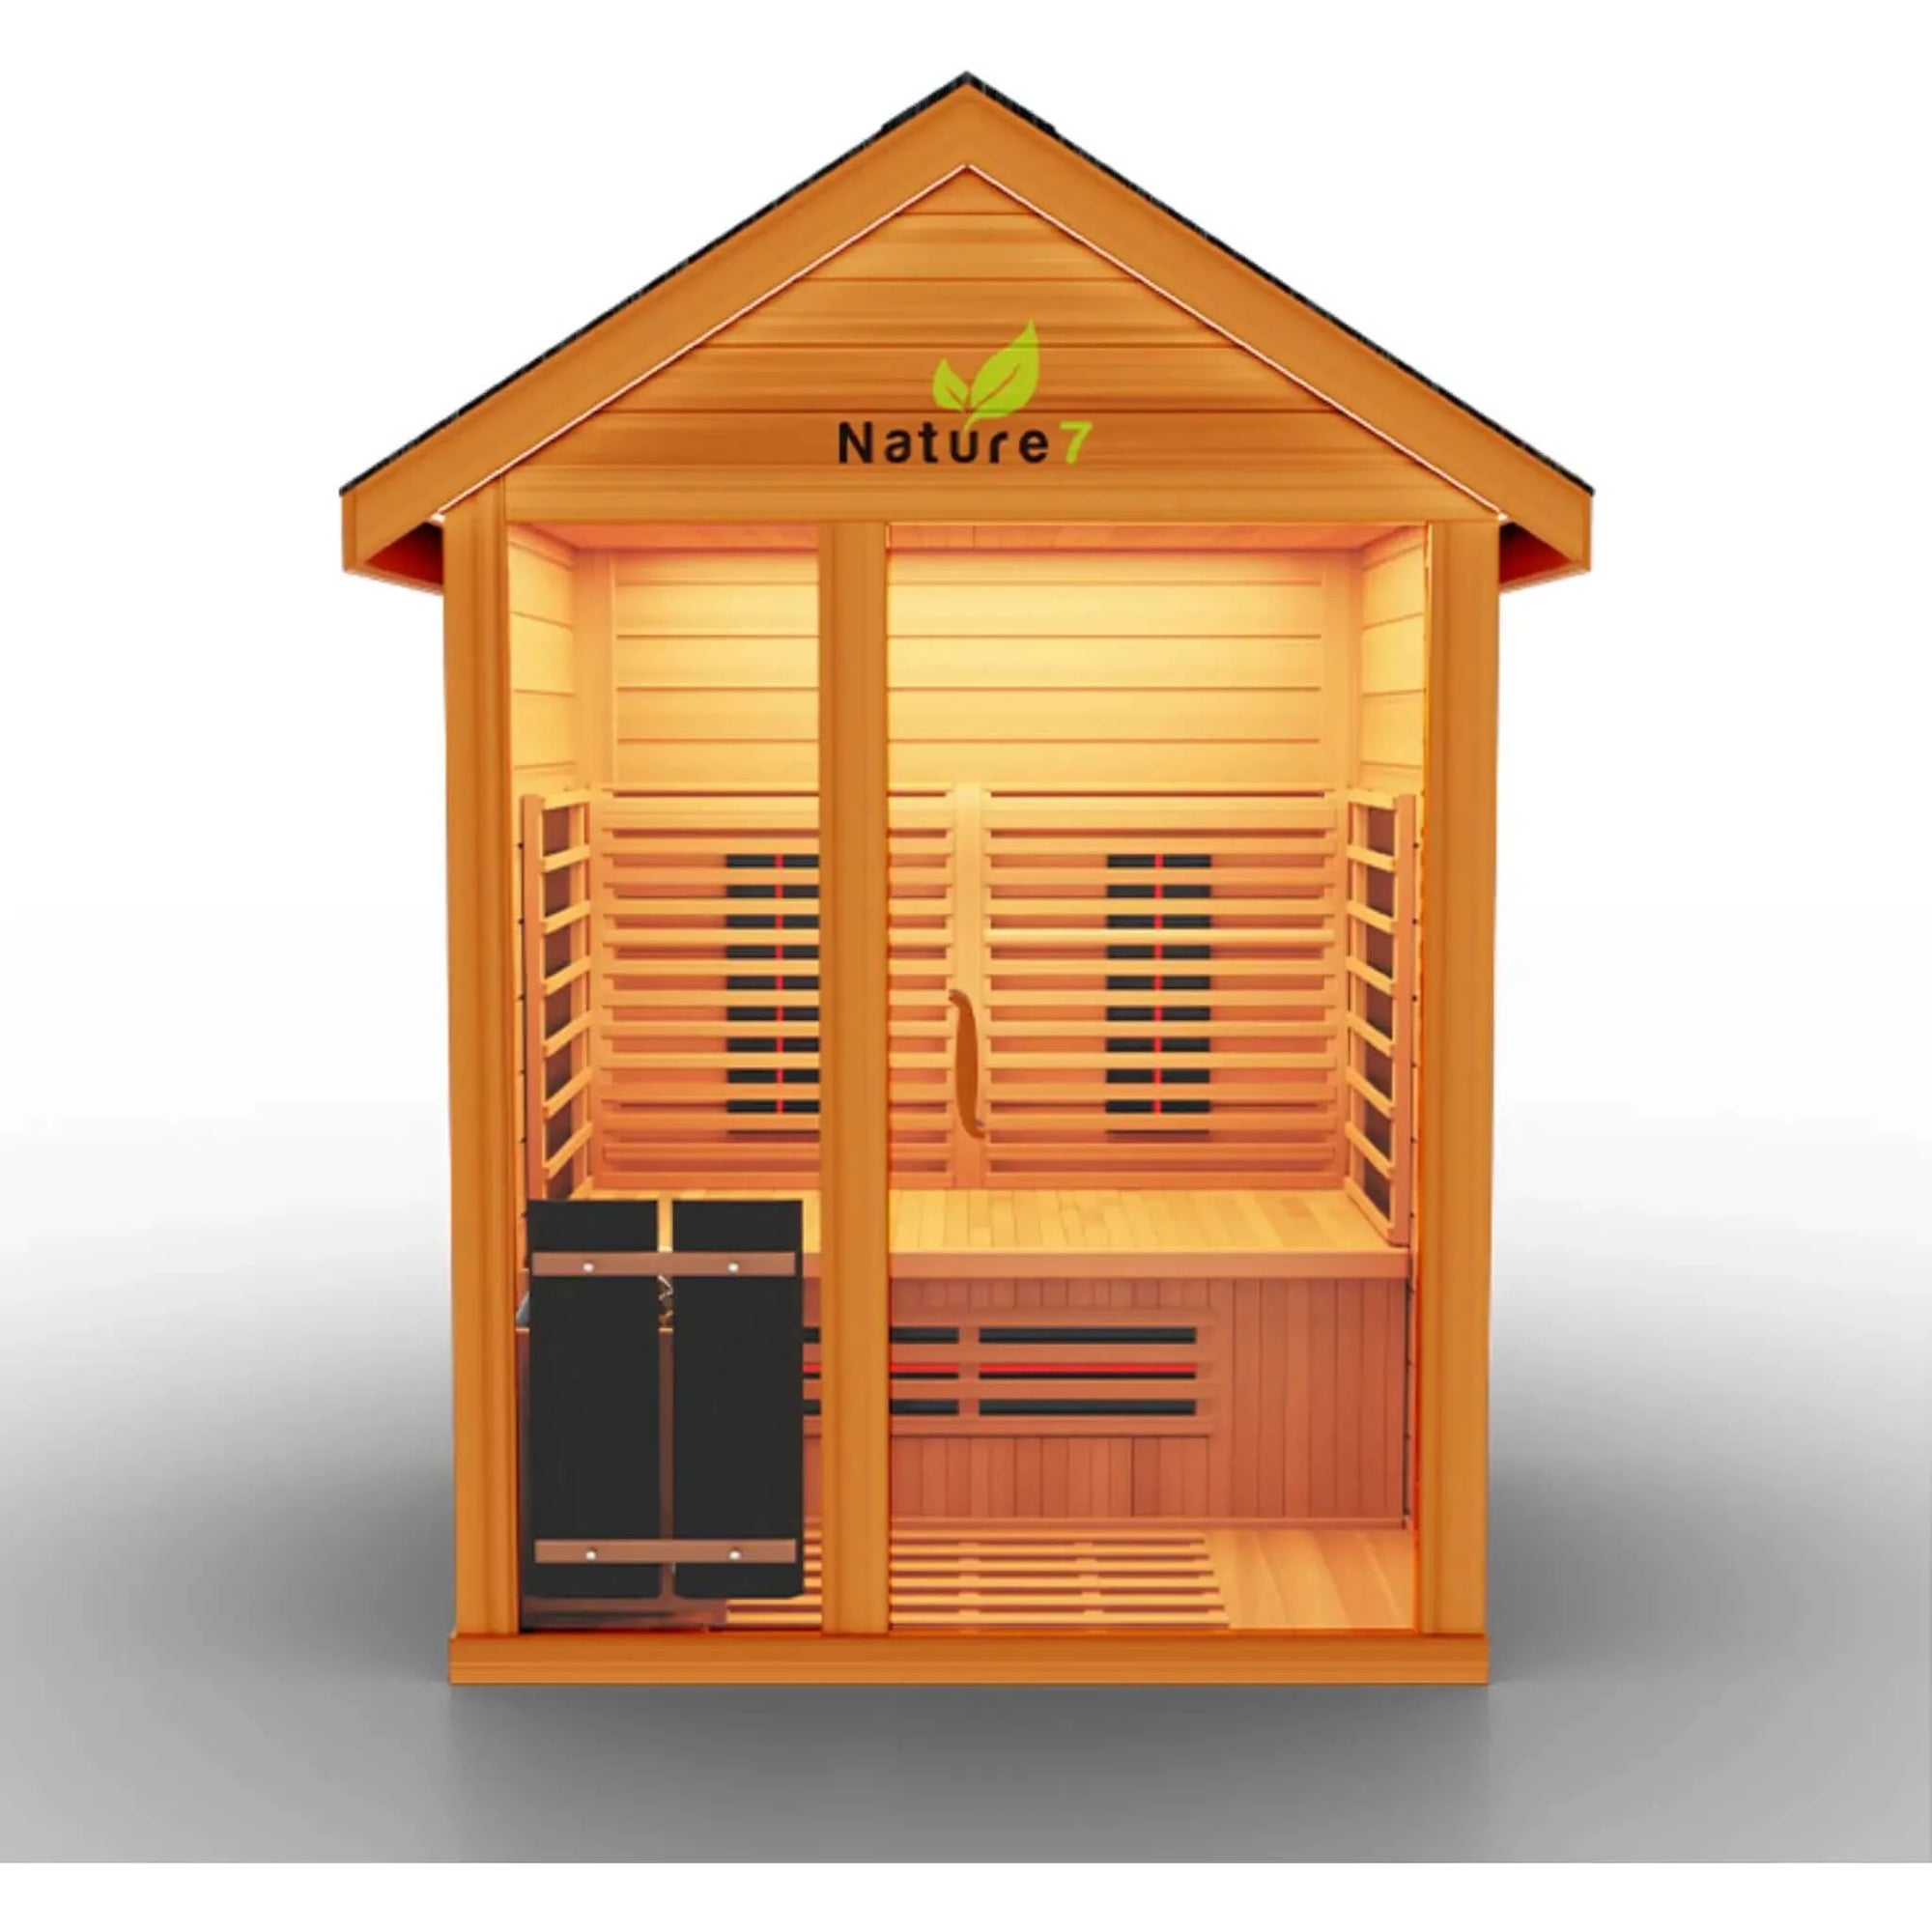 Medical Nature 7 Outdoor Hybrid Sauna